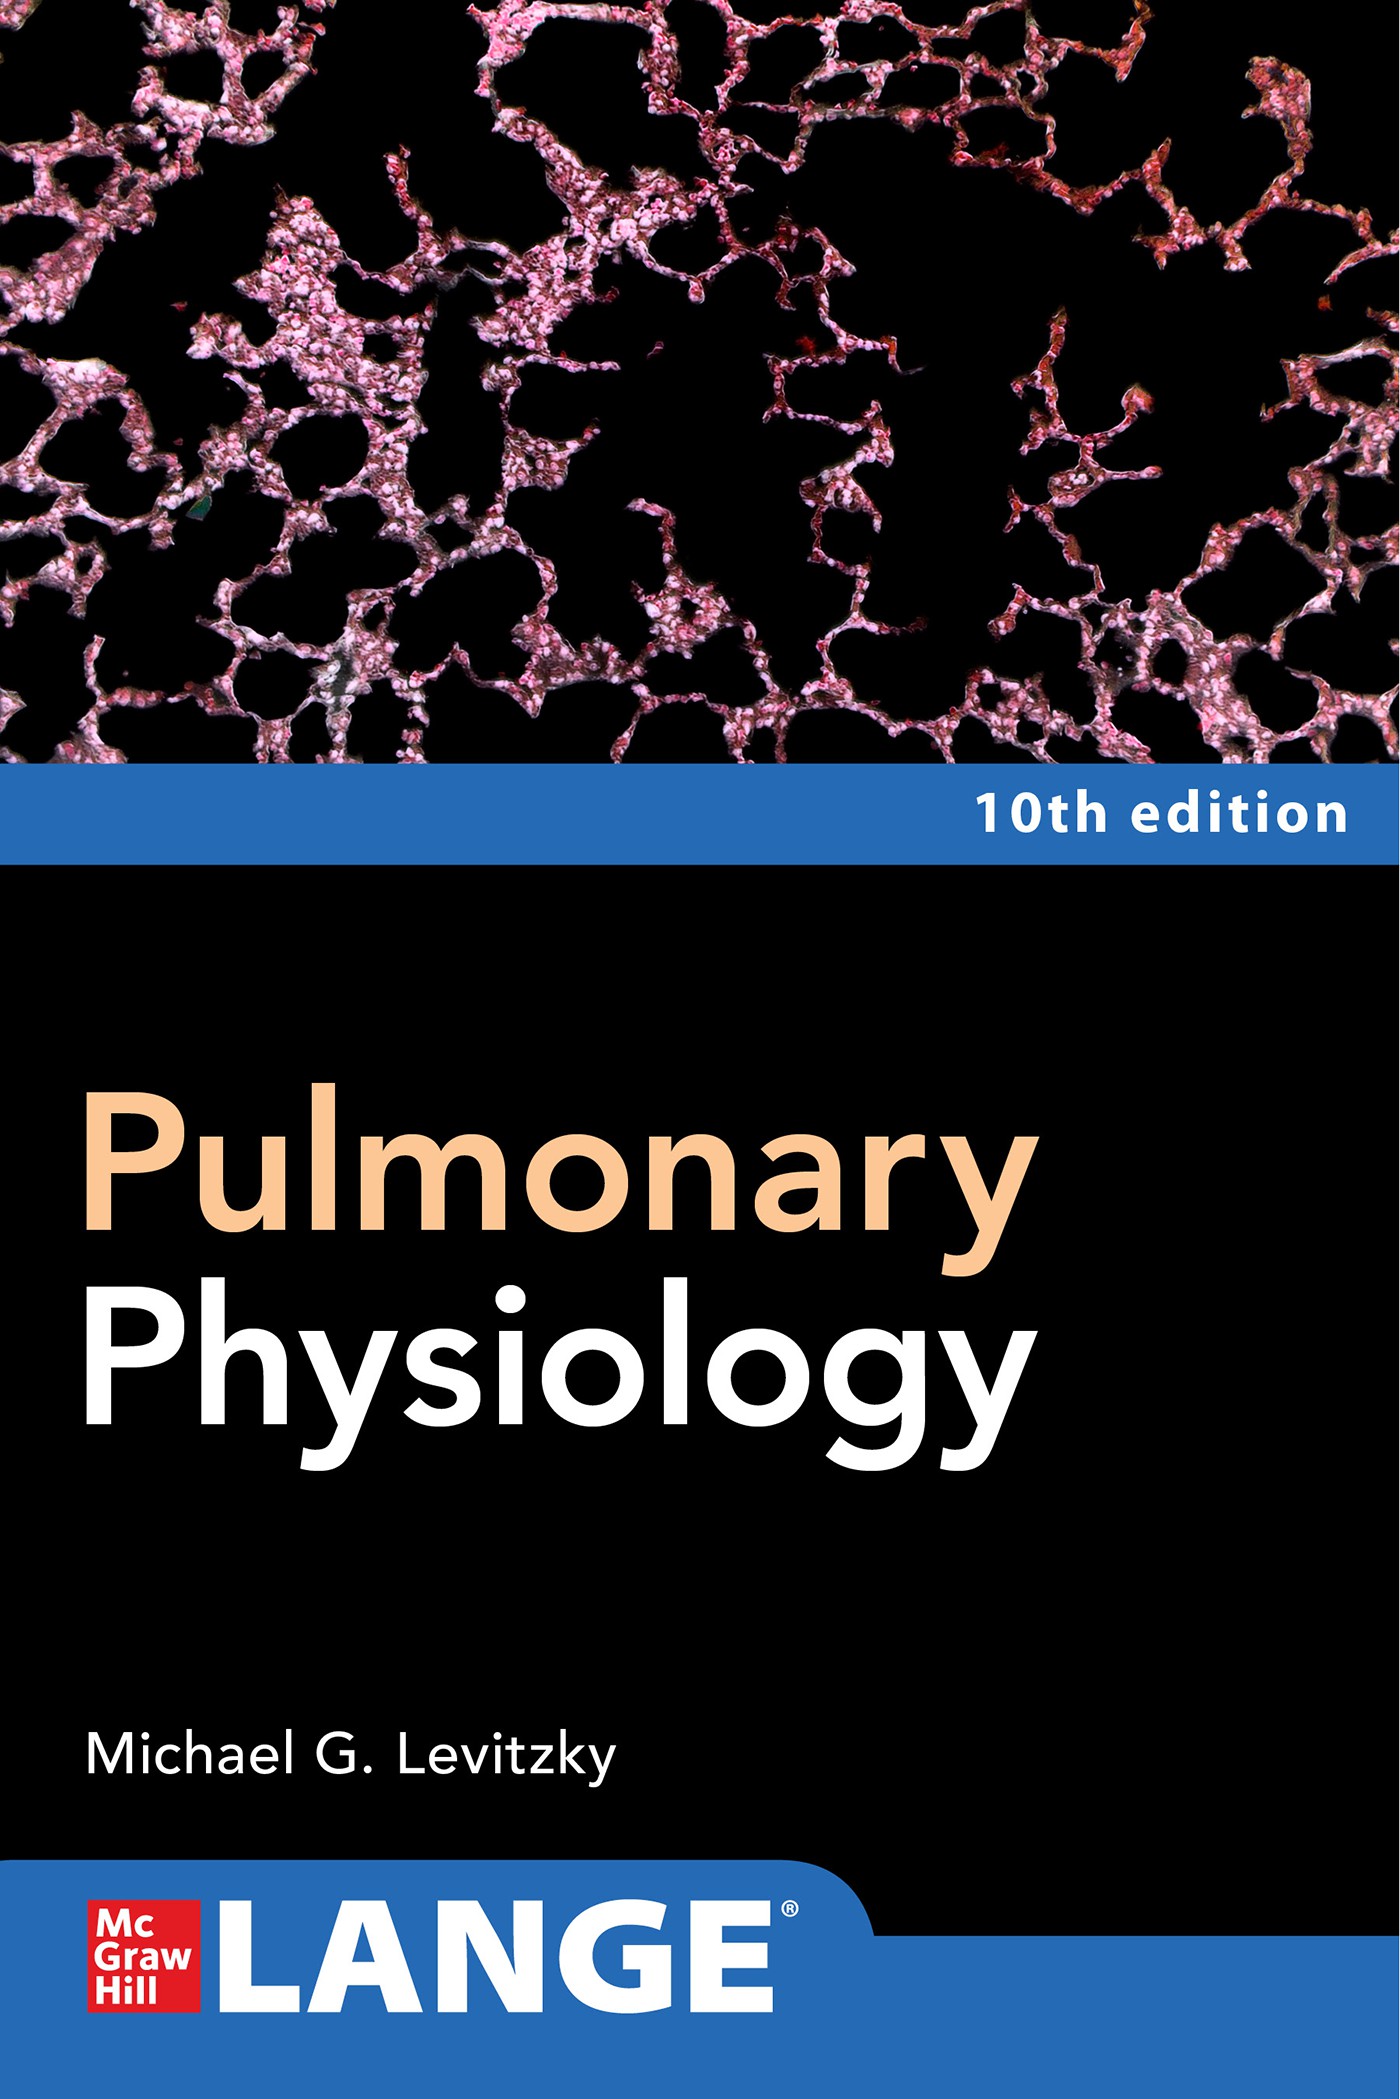 Pulmonary Physiology, Tenth Edition -  10th Edition